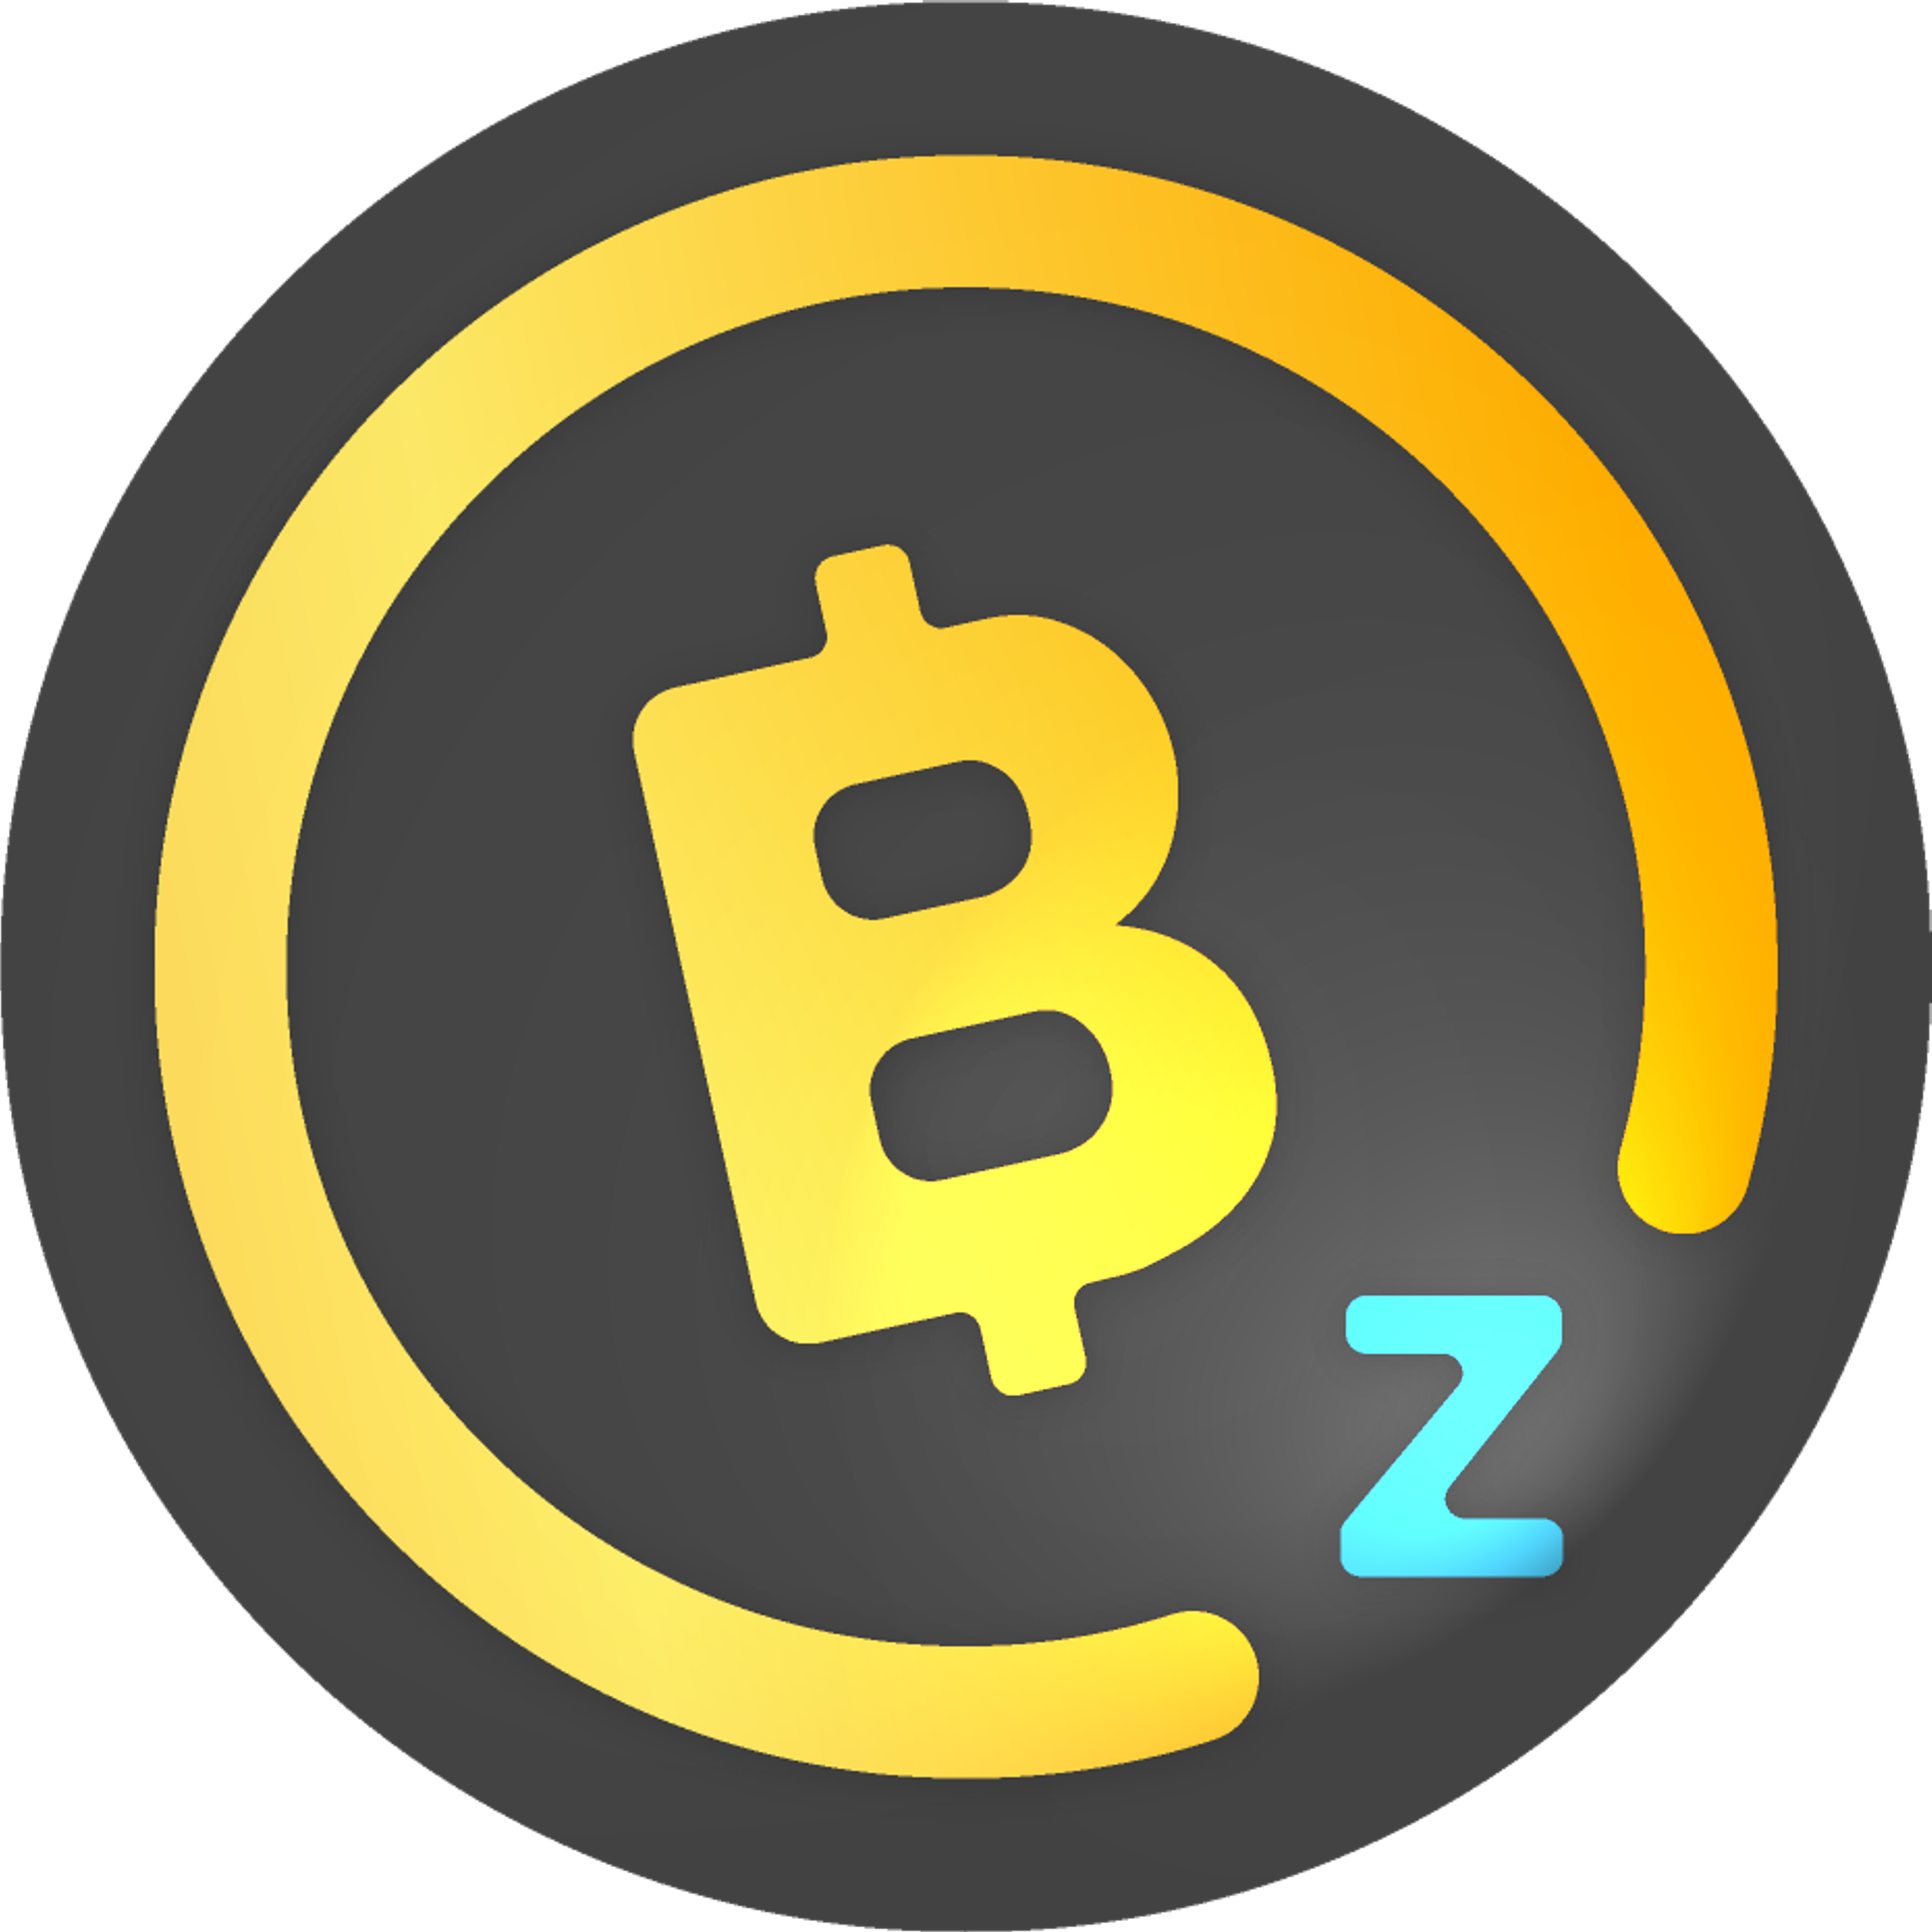 BitcoinZ price today, BTCZ to USD live price, marketcap and chart | CoinMarketCap